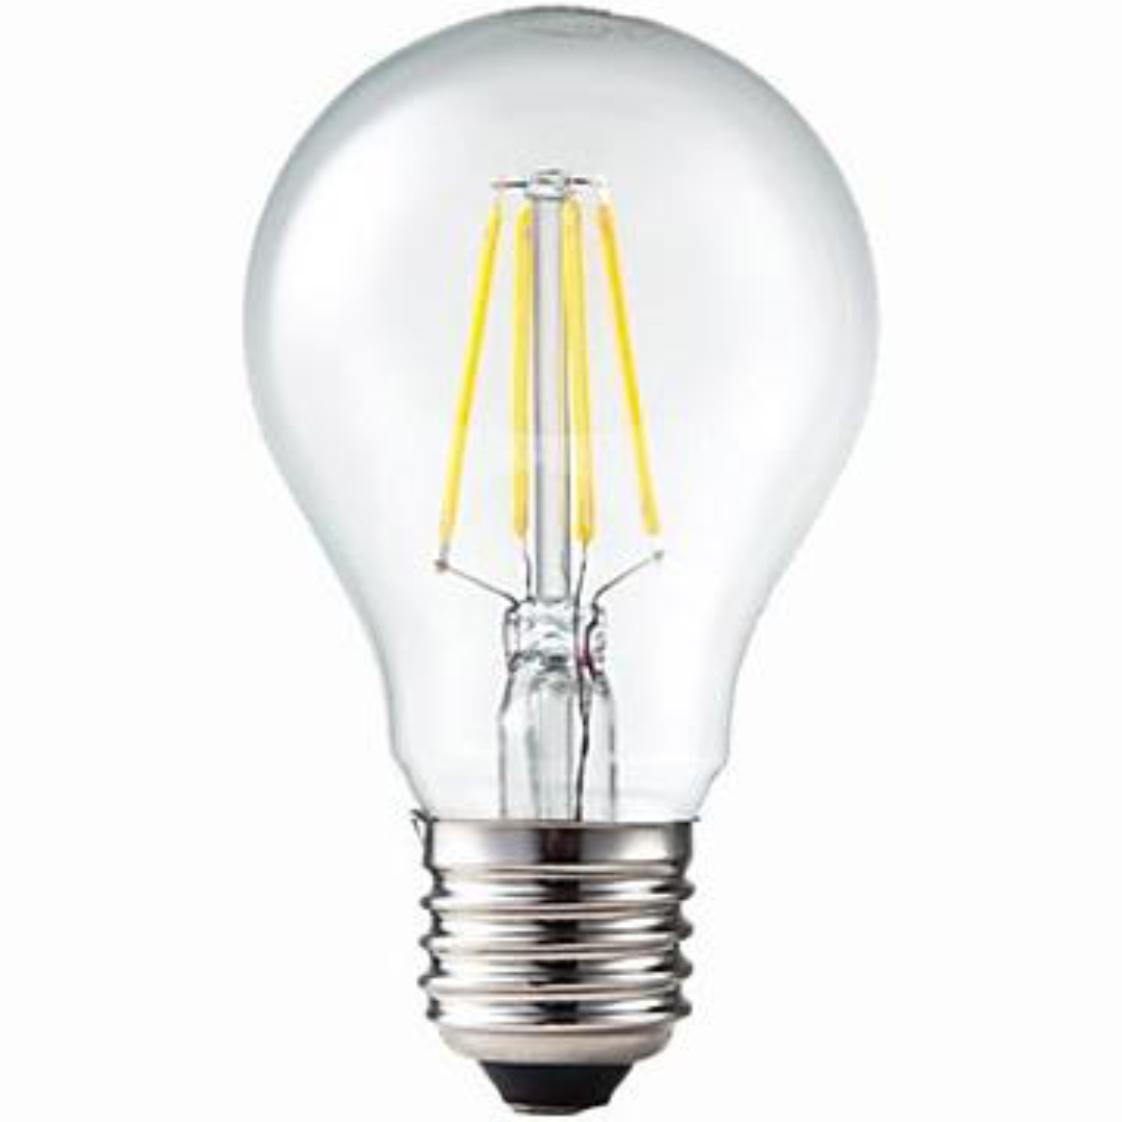 musical doolhof Schrijfmachine Filament Led Lamp - 800 Lumen - Lamptype: E27 - Led, Vermogen: 7.5 Watt -  230 Volt, Lichtsterkte: 800 lumen, Afmetingen: Ø60mm/H104mm, Lichtkleur:  Extra warm wit - 2700 K.